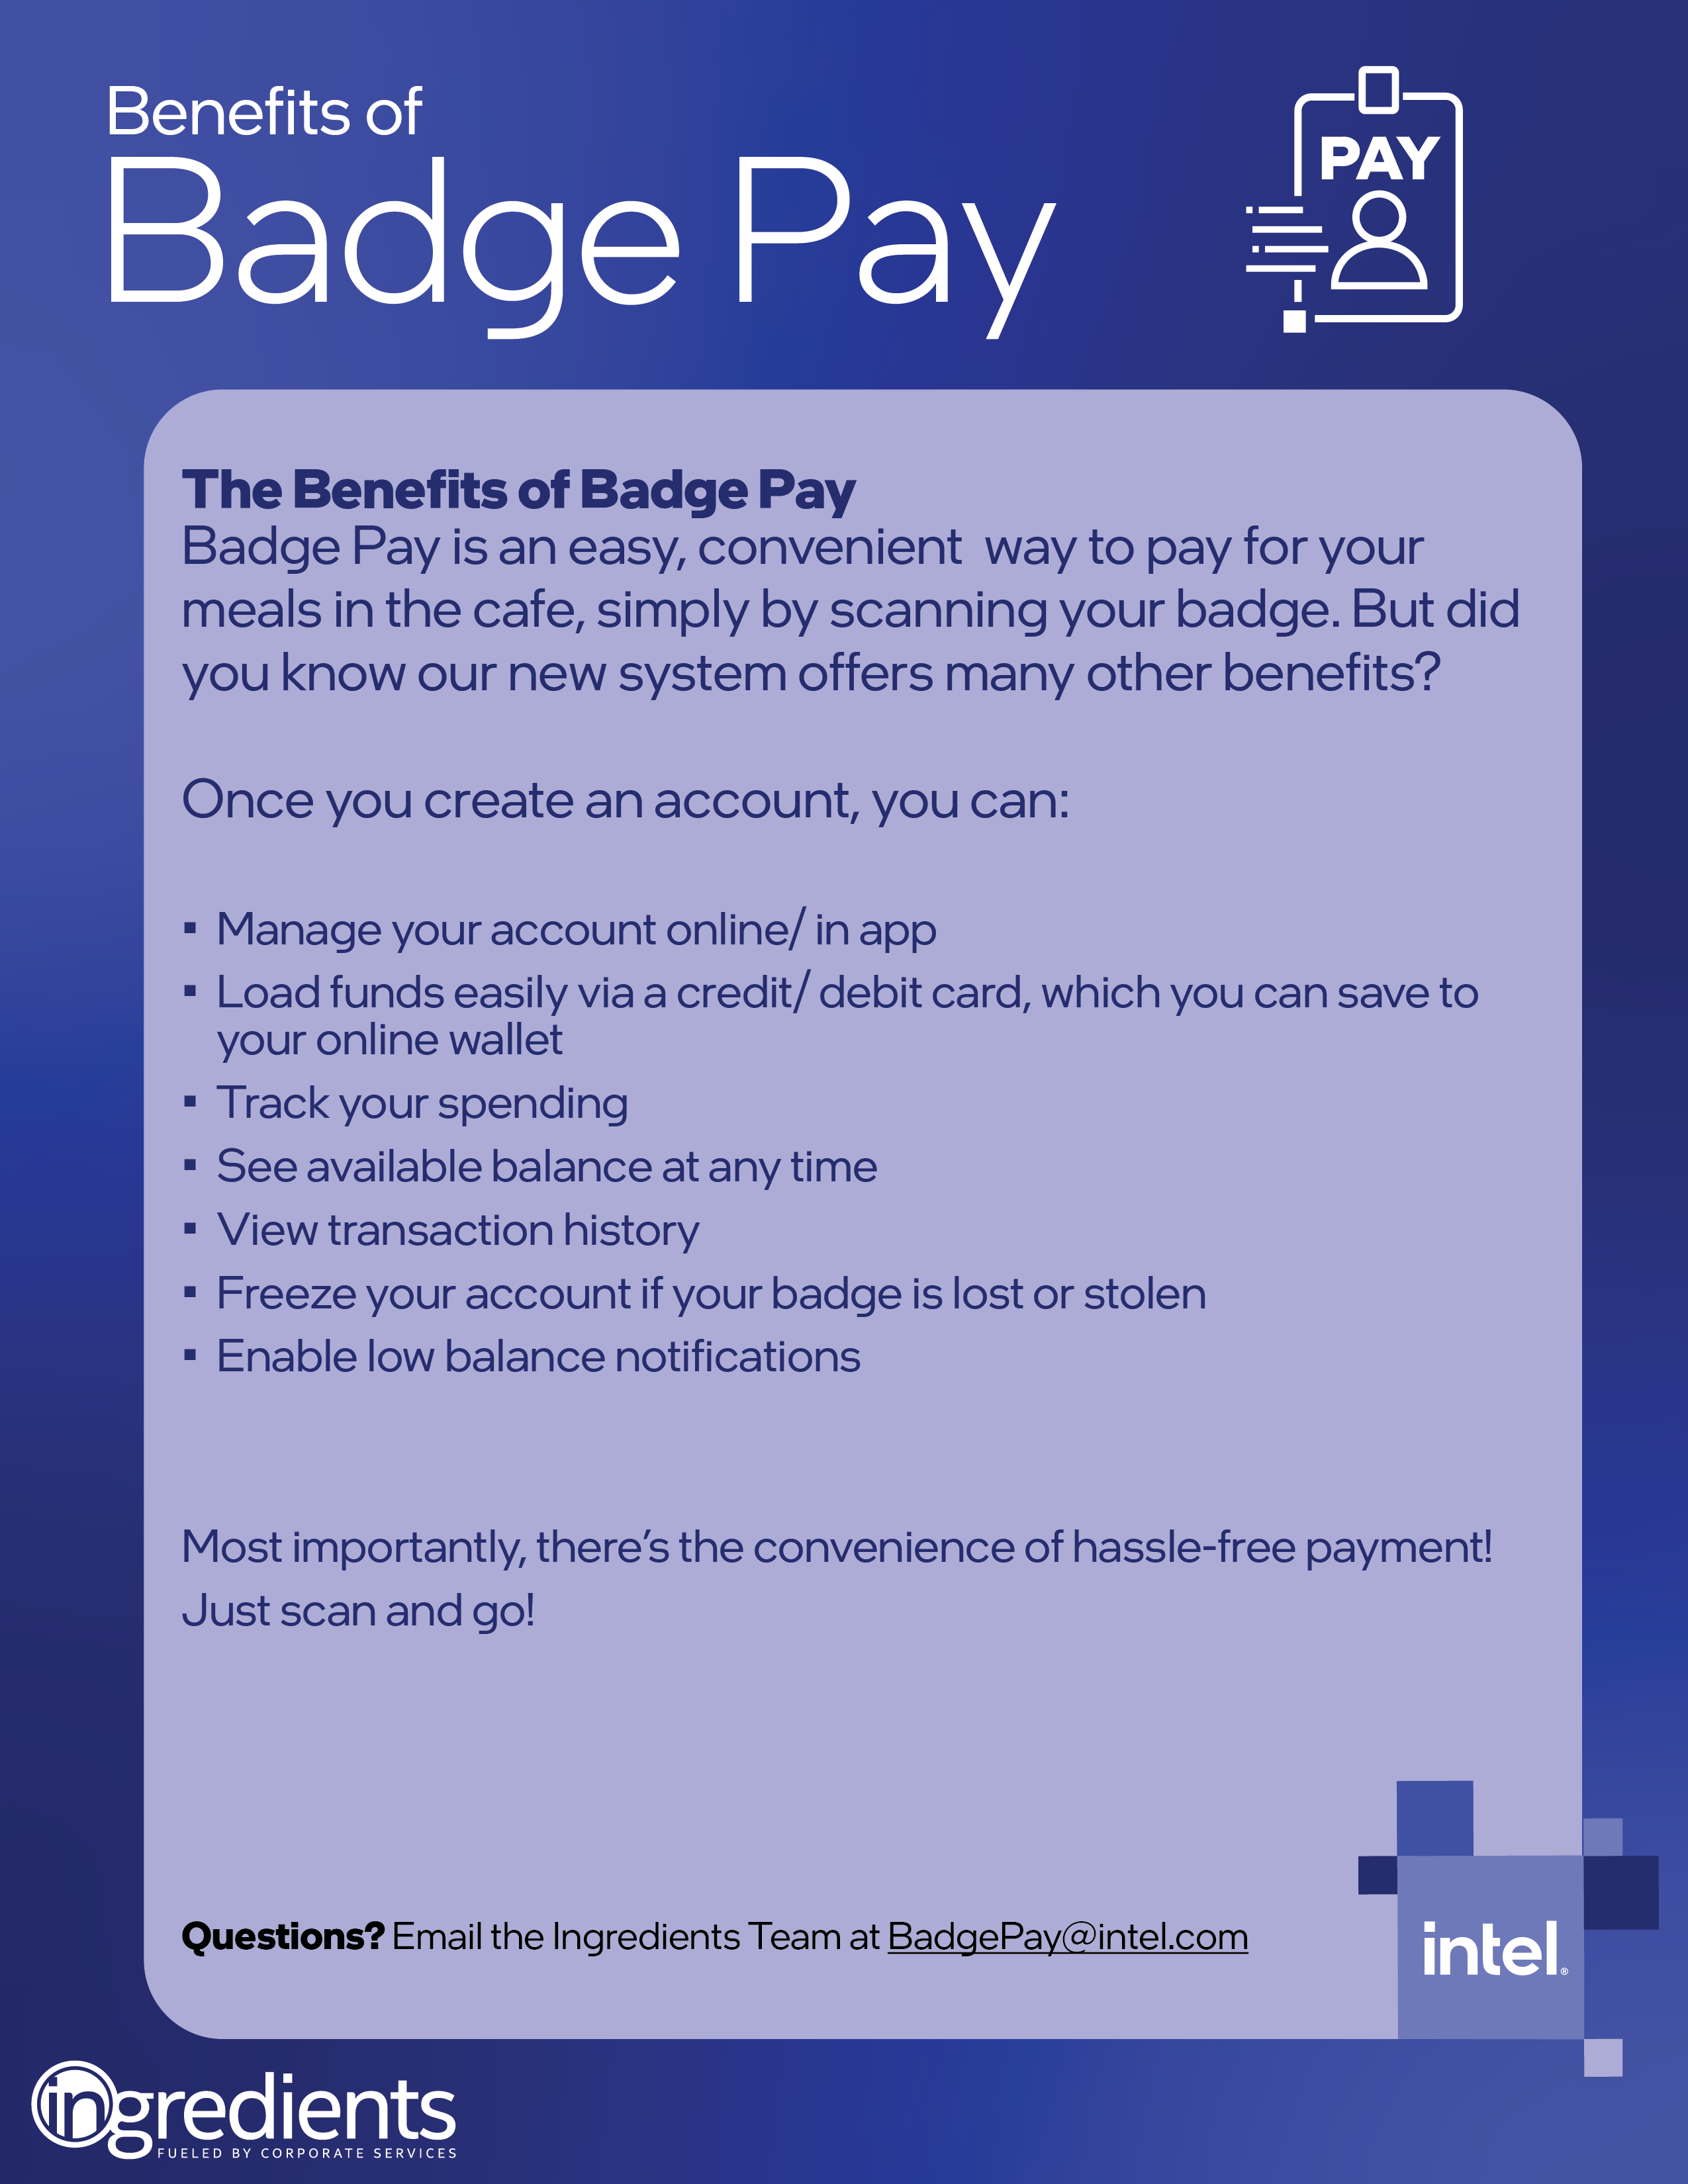 Benefits of Badge Pay_V2.jpg